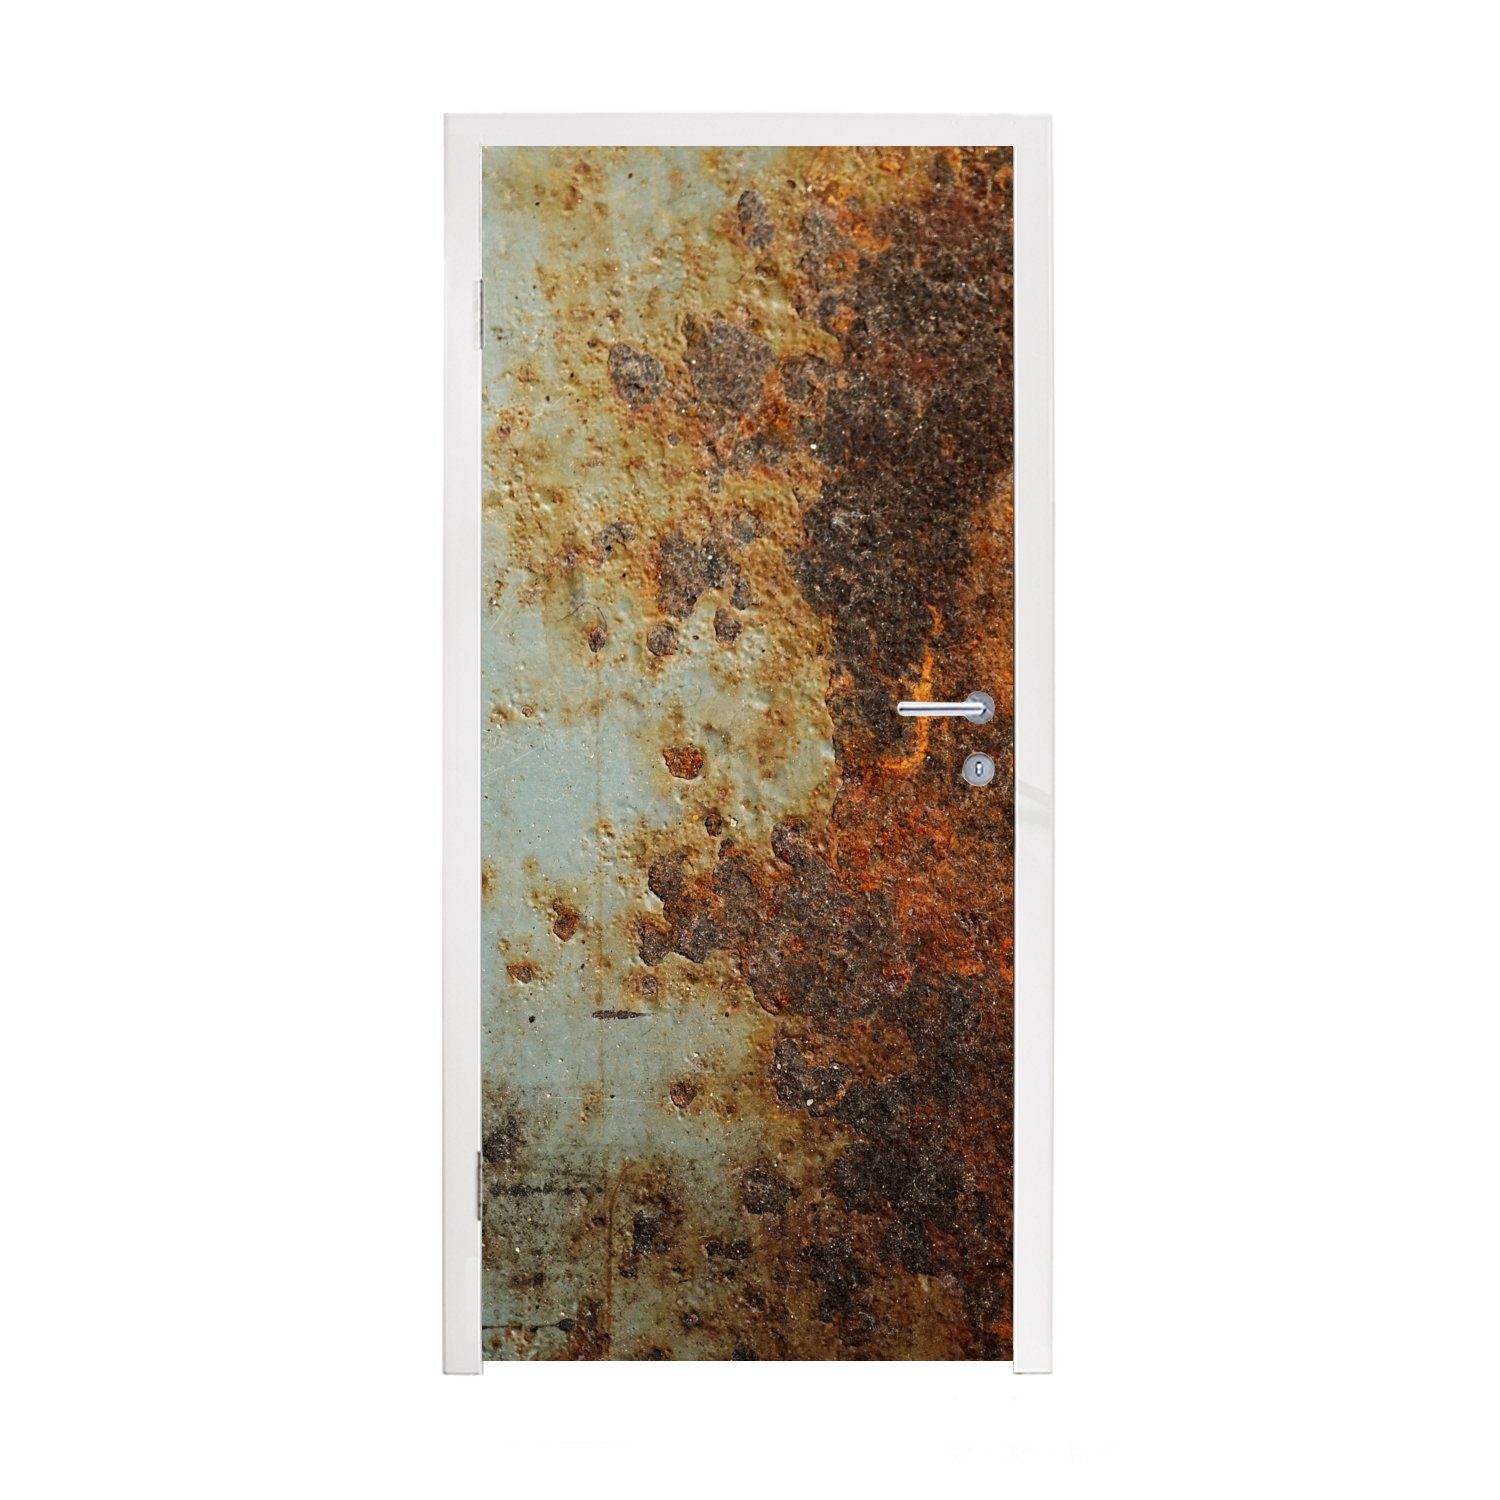 MuchoWow Türtapete Stahlblech - Alt - Rost, Matt, bedruckt, (1 St), Fototapete für Tür, Türaufkleber, 75x205 cm